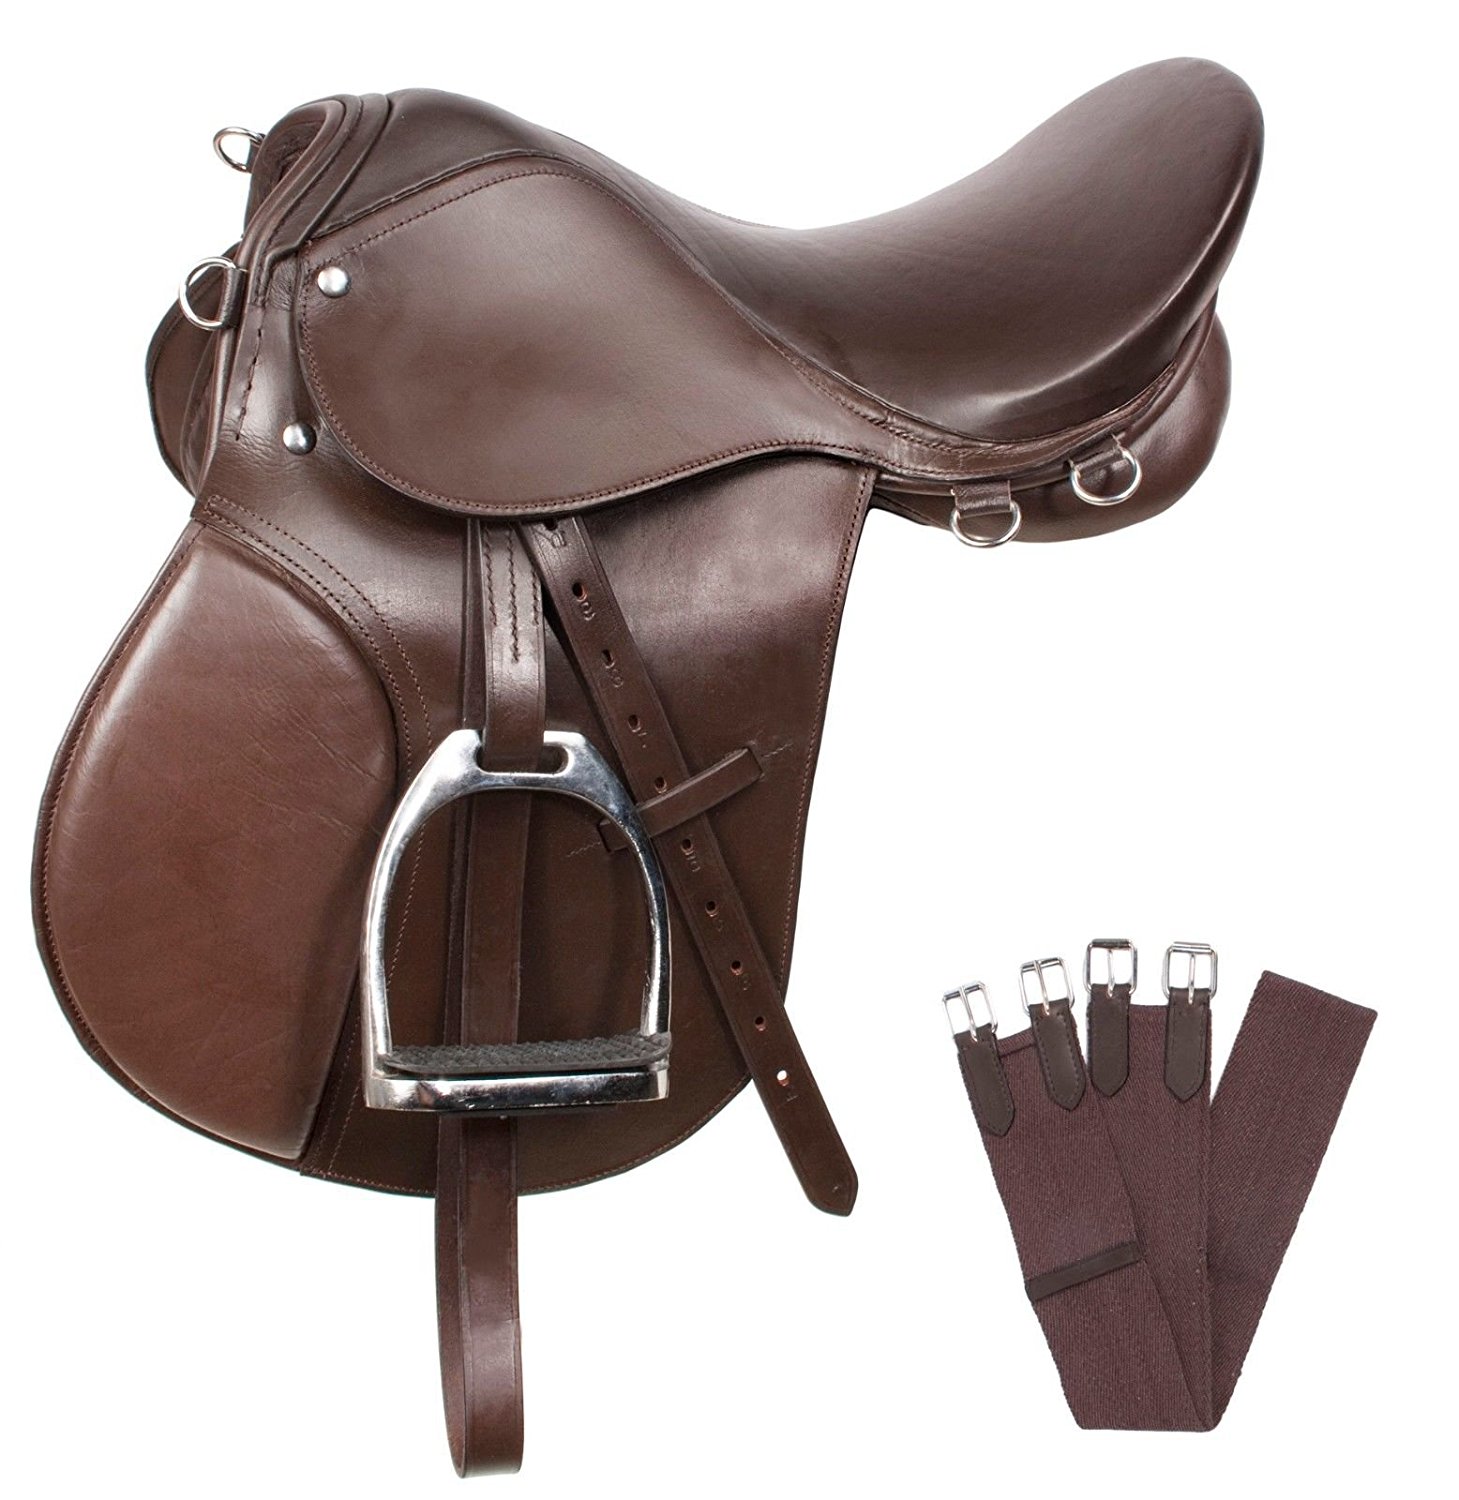 Amazon.com : New Brown All Purpose English Riding Horse Saddle ...